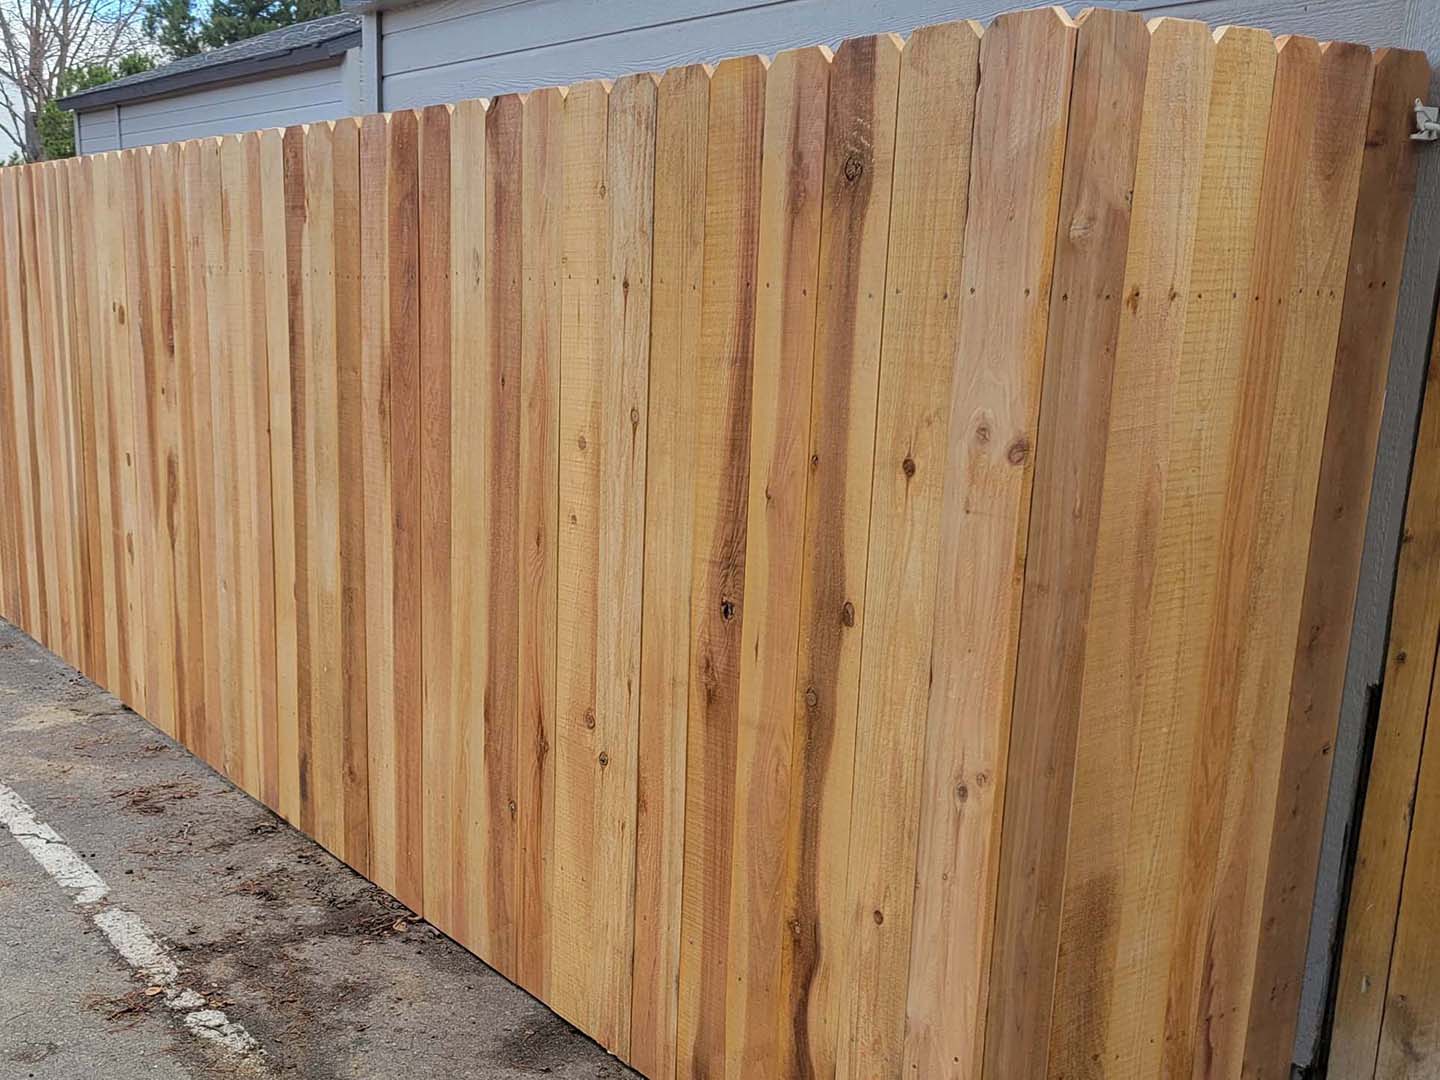 Star Idaho wood privacy fencing